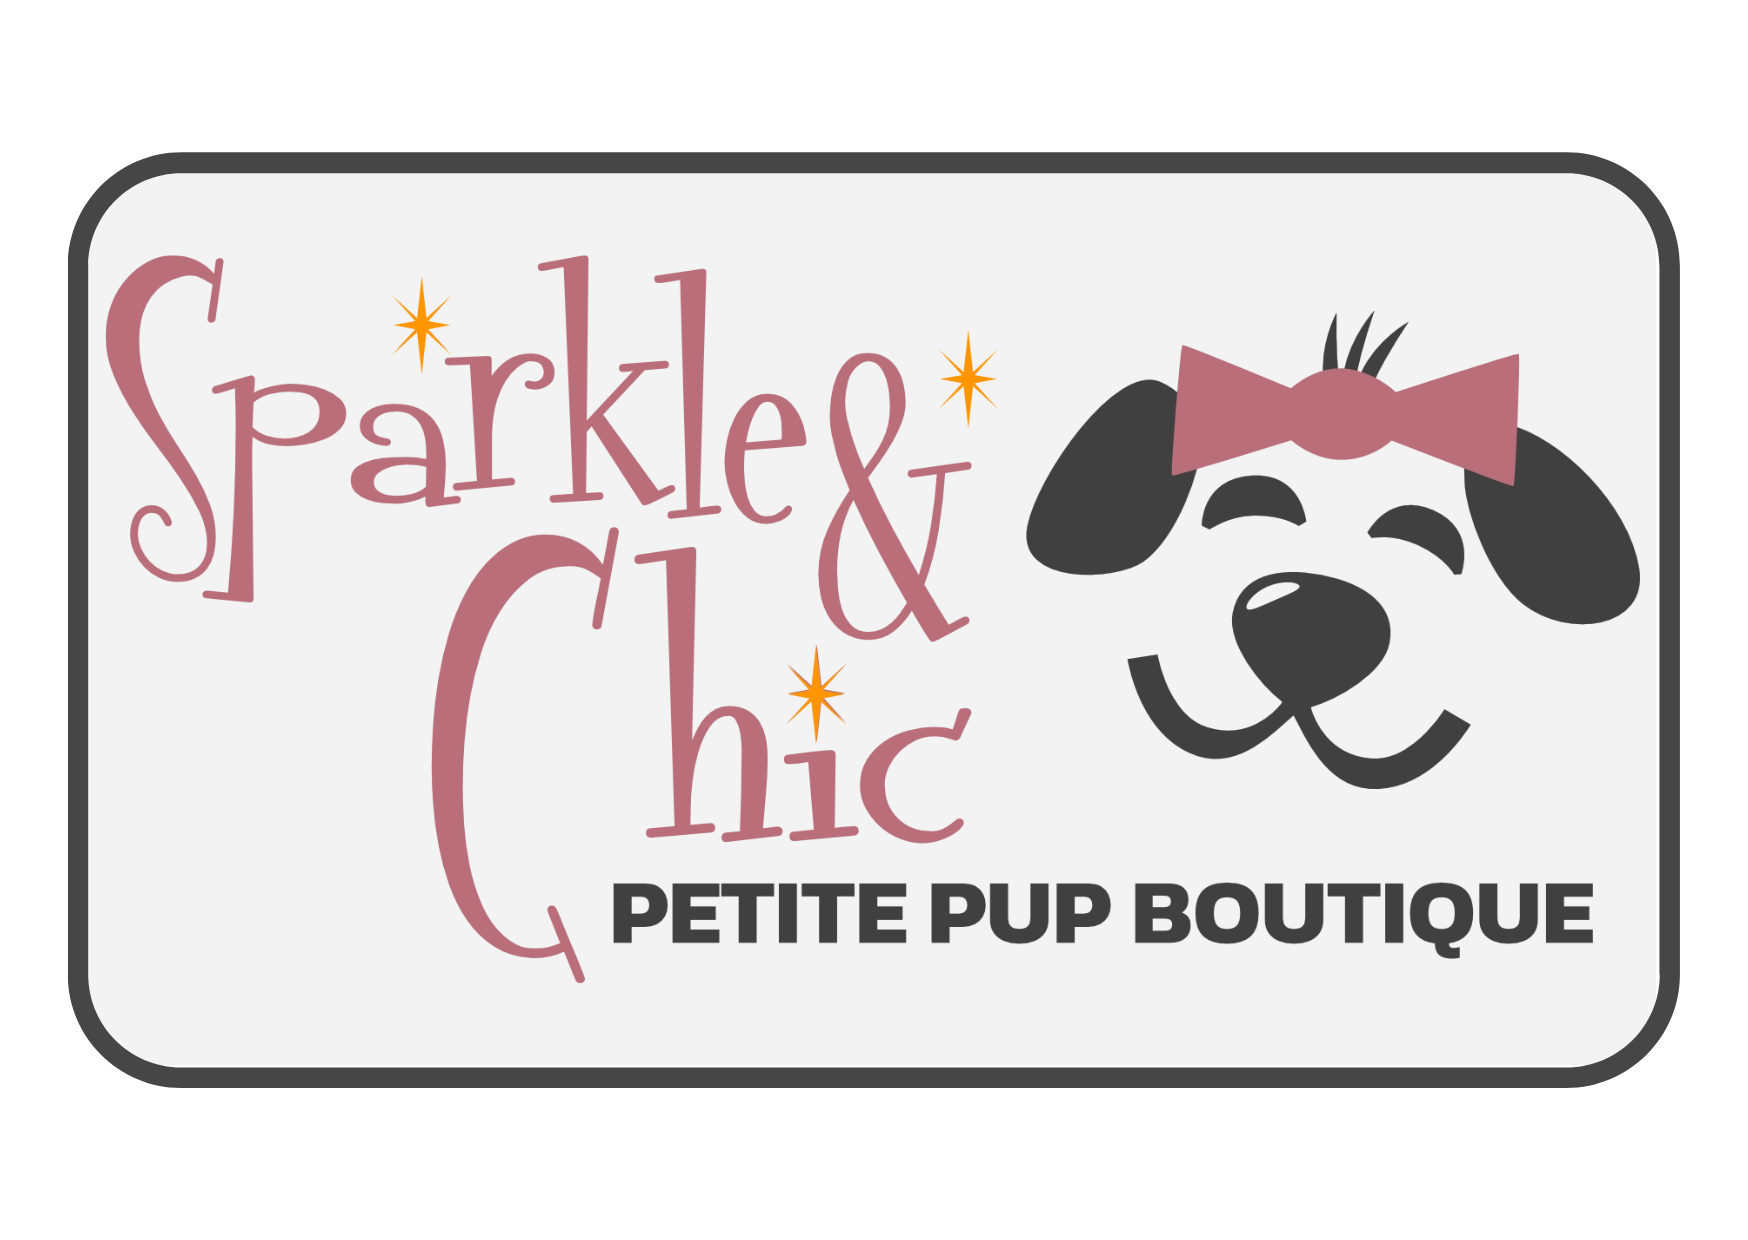 Sparkle & Chic Petite Pup Boutique gift card.